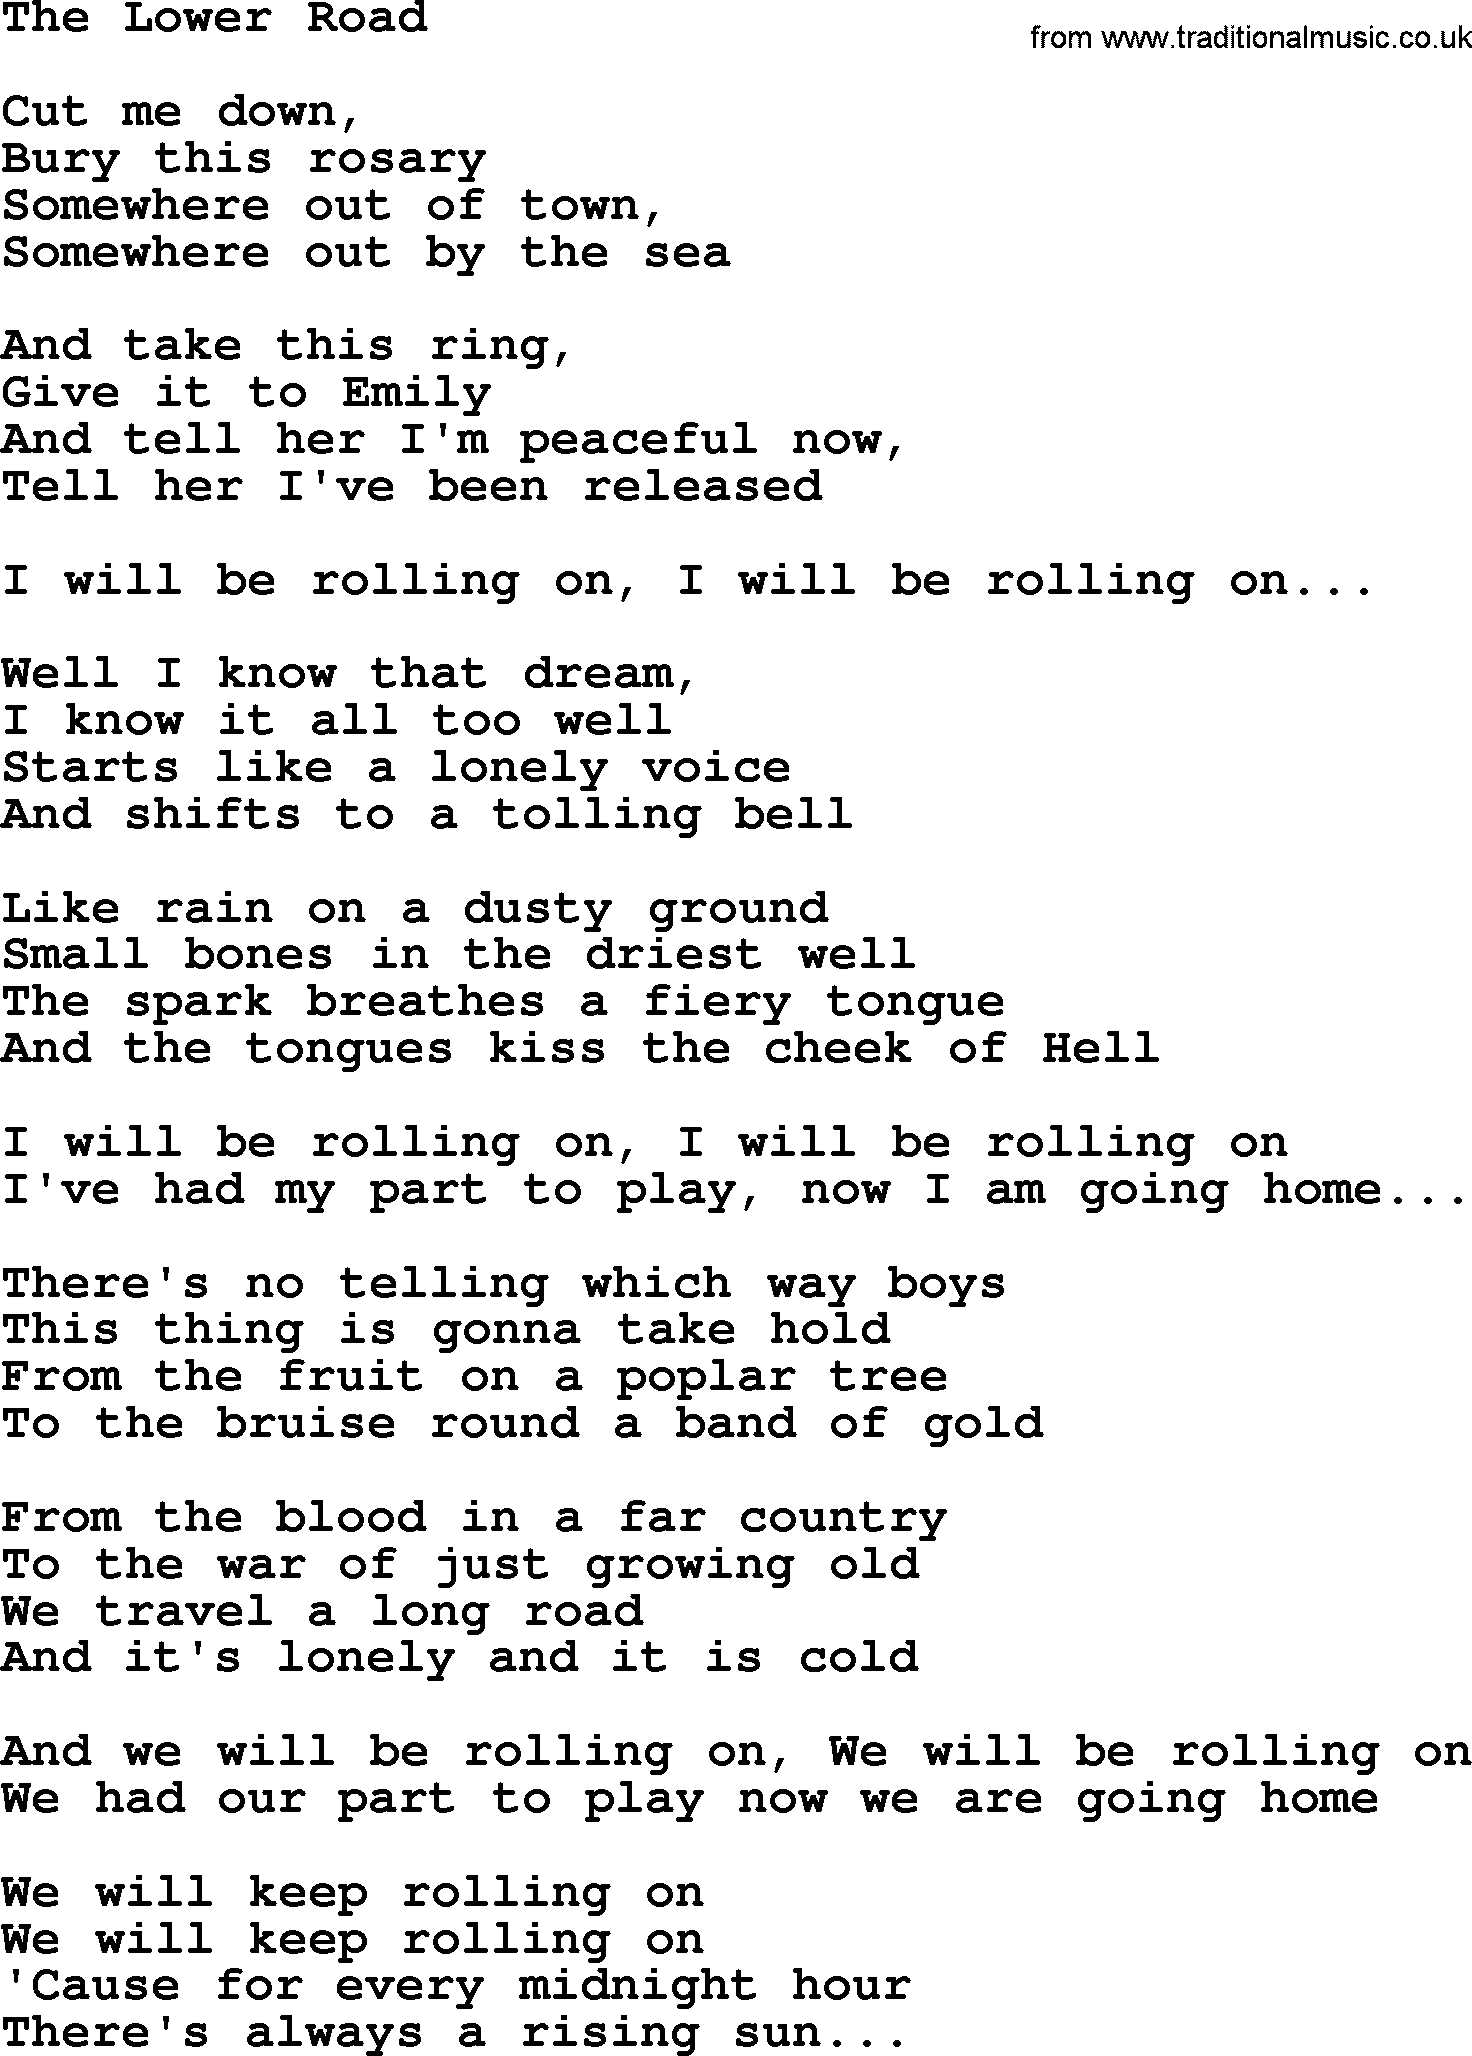 Joan Baez song The Lower Road, lyrics